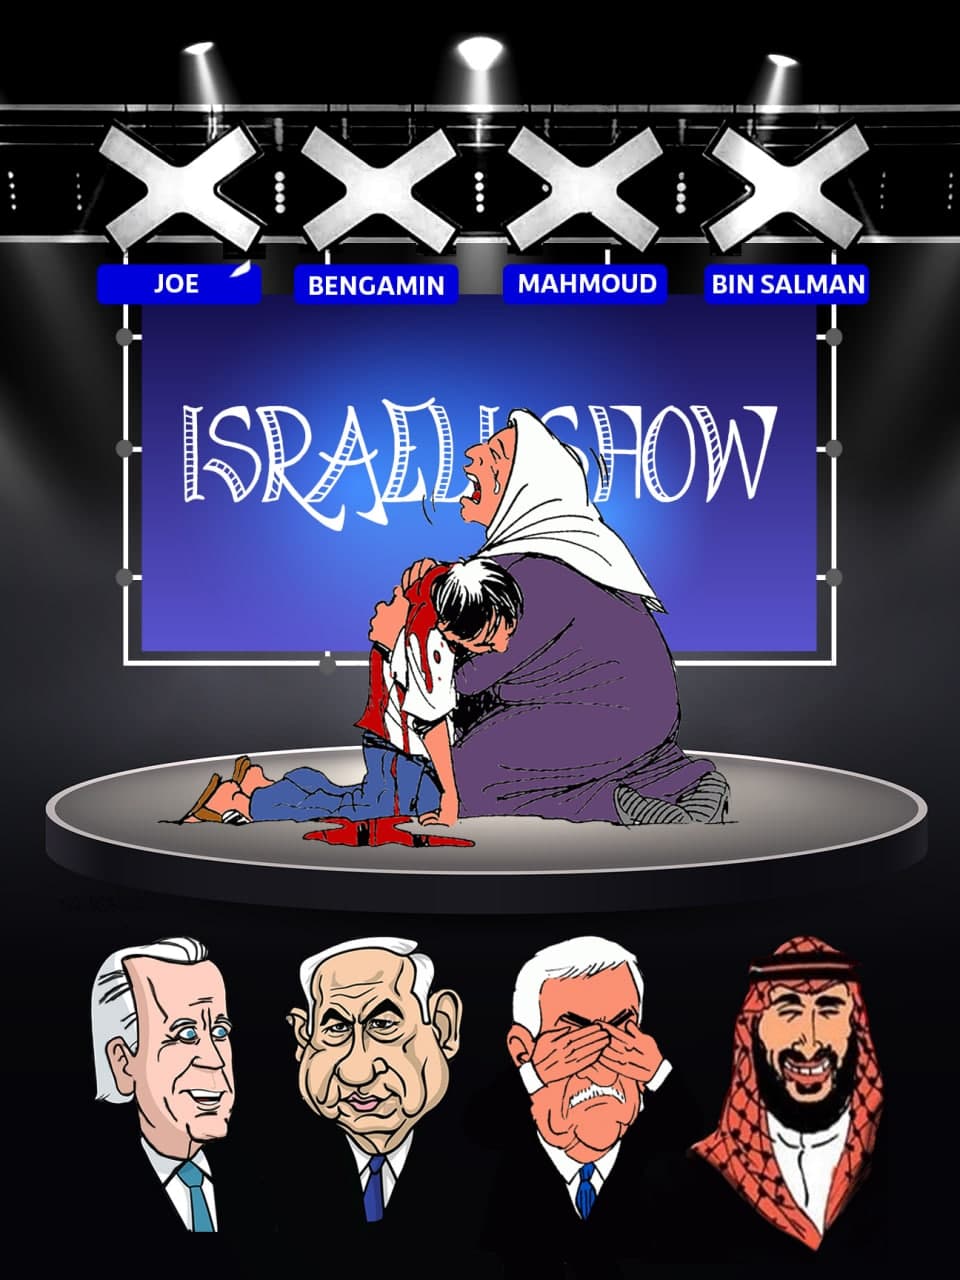 ISRAEL SHOW